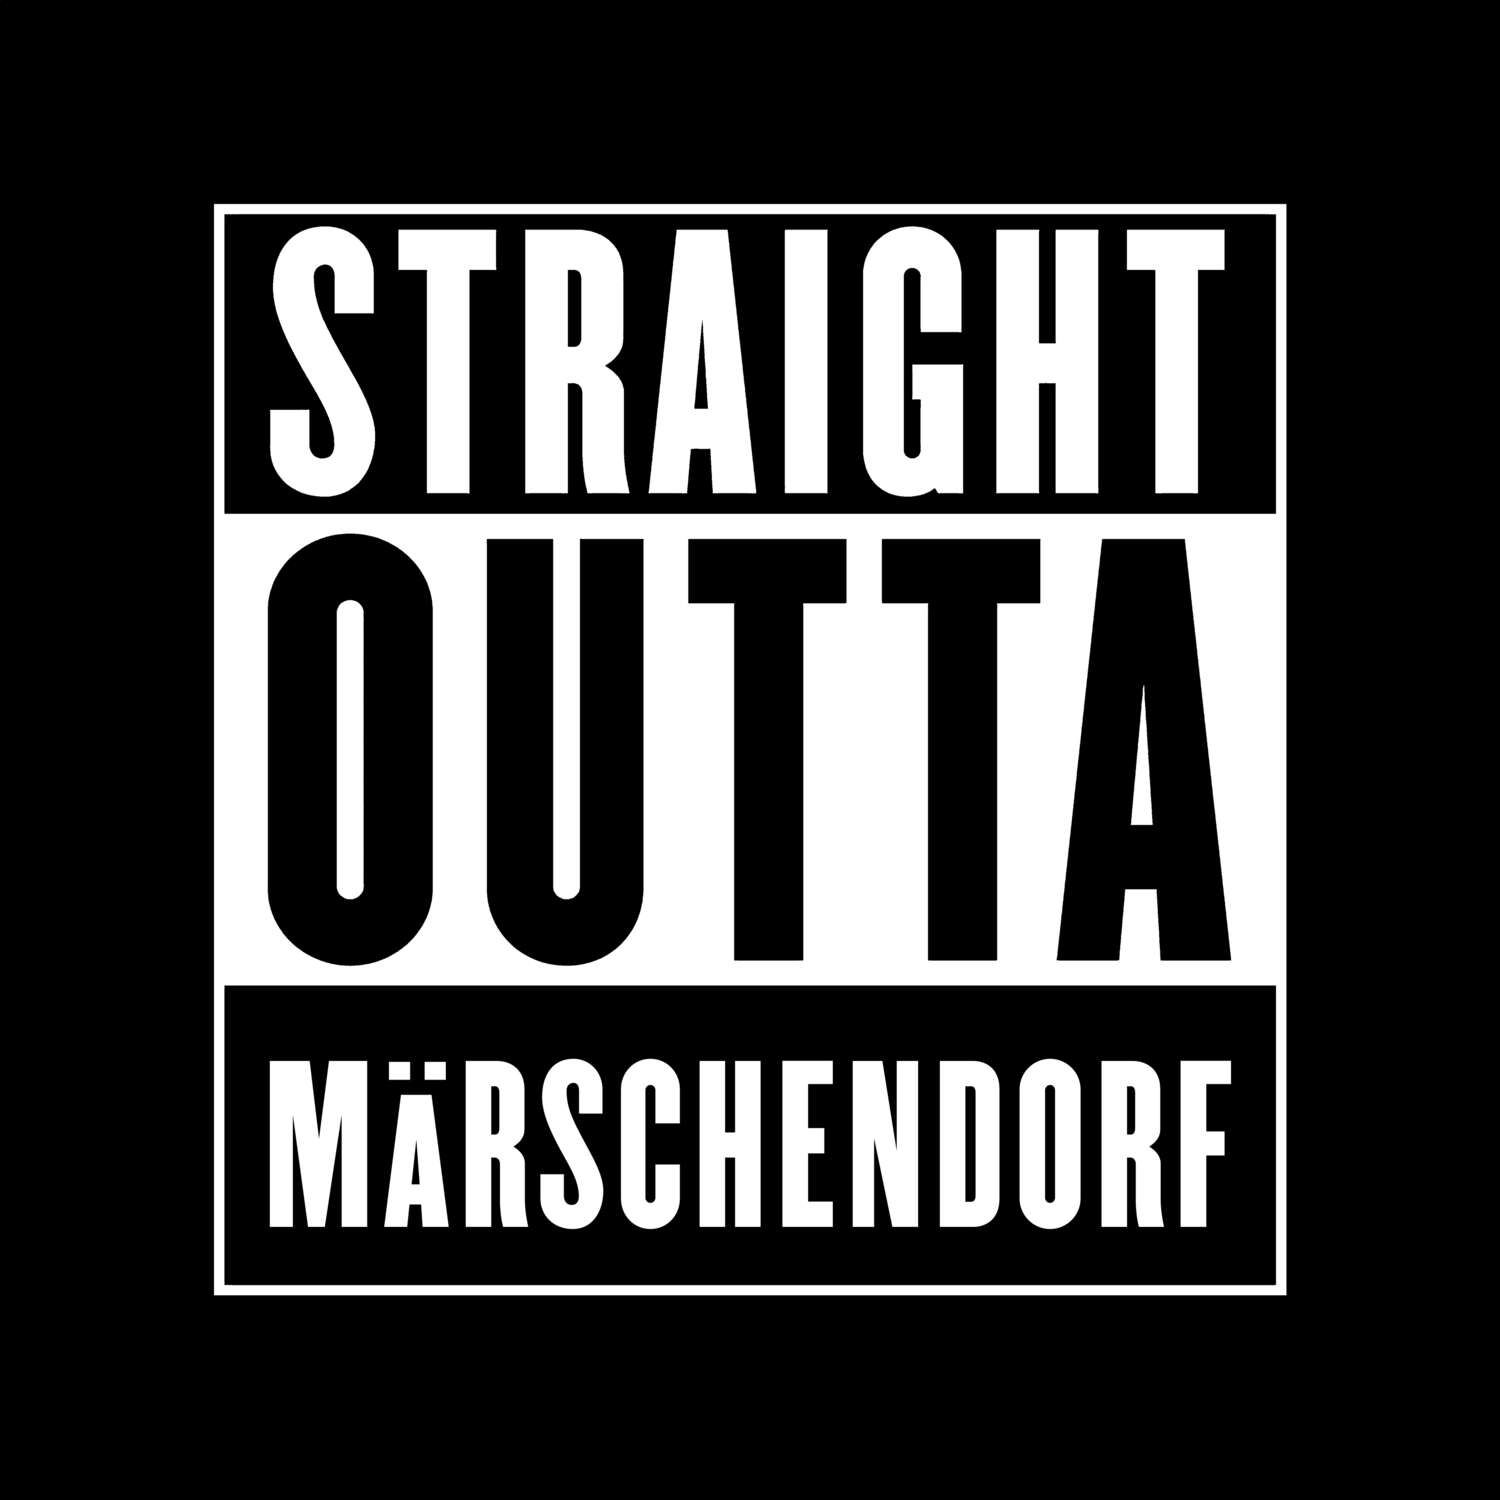 Märschendorf T-Shirt »Straight Outta«